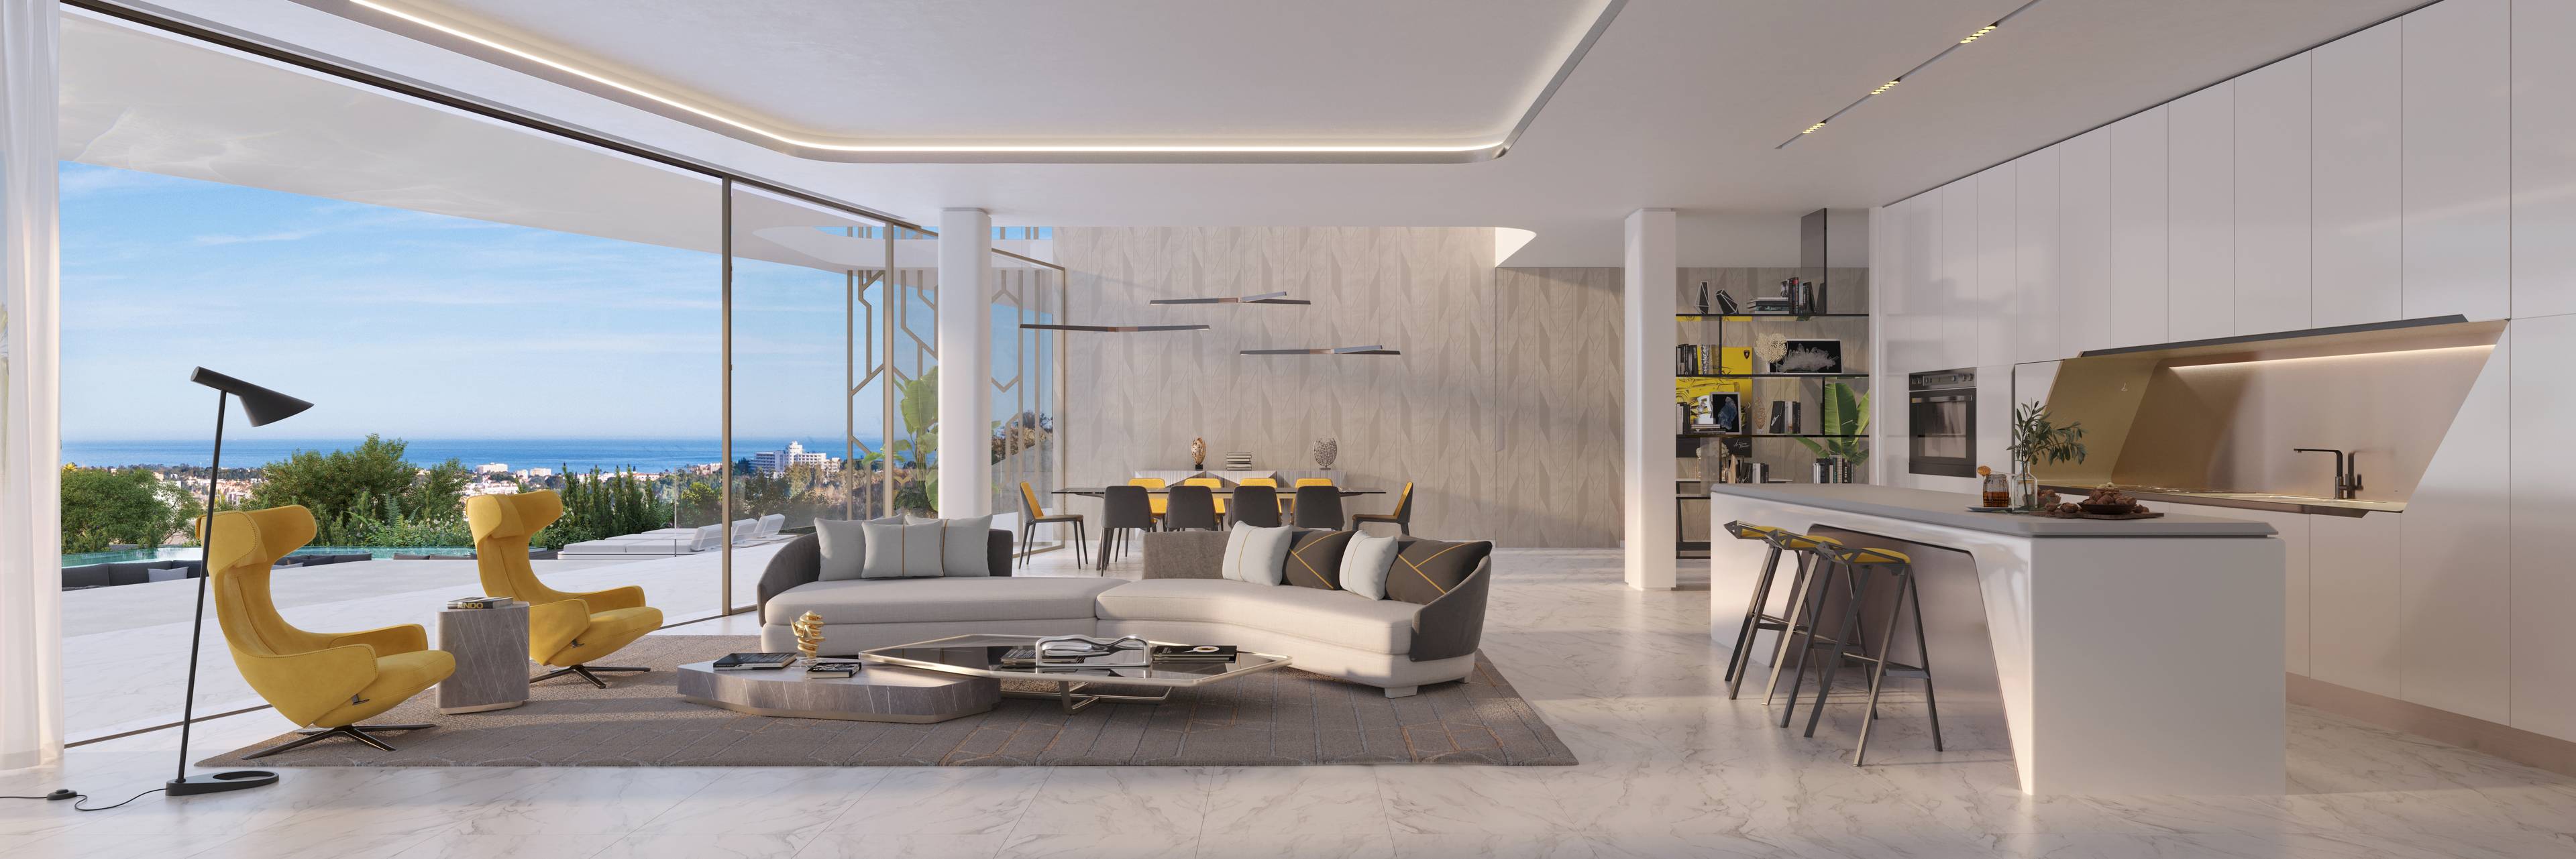 Tierra Viva: Design Inspired by Automobili Lamborghini - 5 Bedroom Villa in the heart of Benahavís - Costa Del Sol